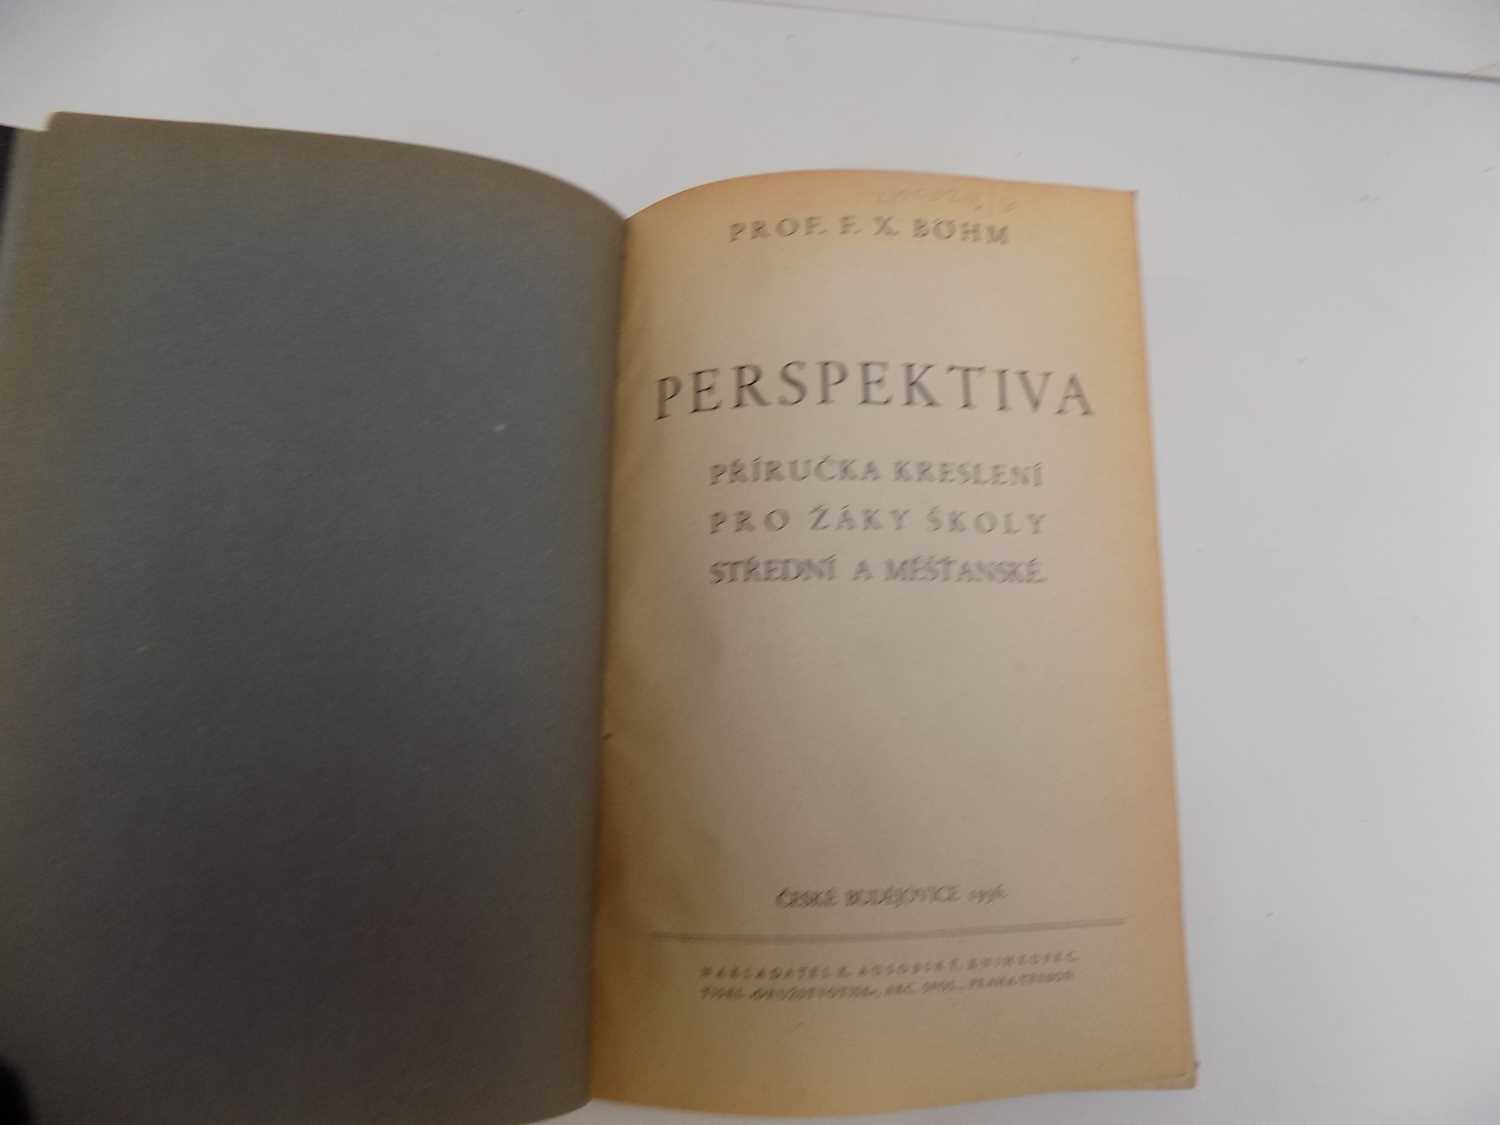 BOHM (PROF. F.X.) "Perspektiva." Orig, bds, Budejovice 1936 VG. - Image 2 of 8